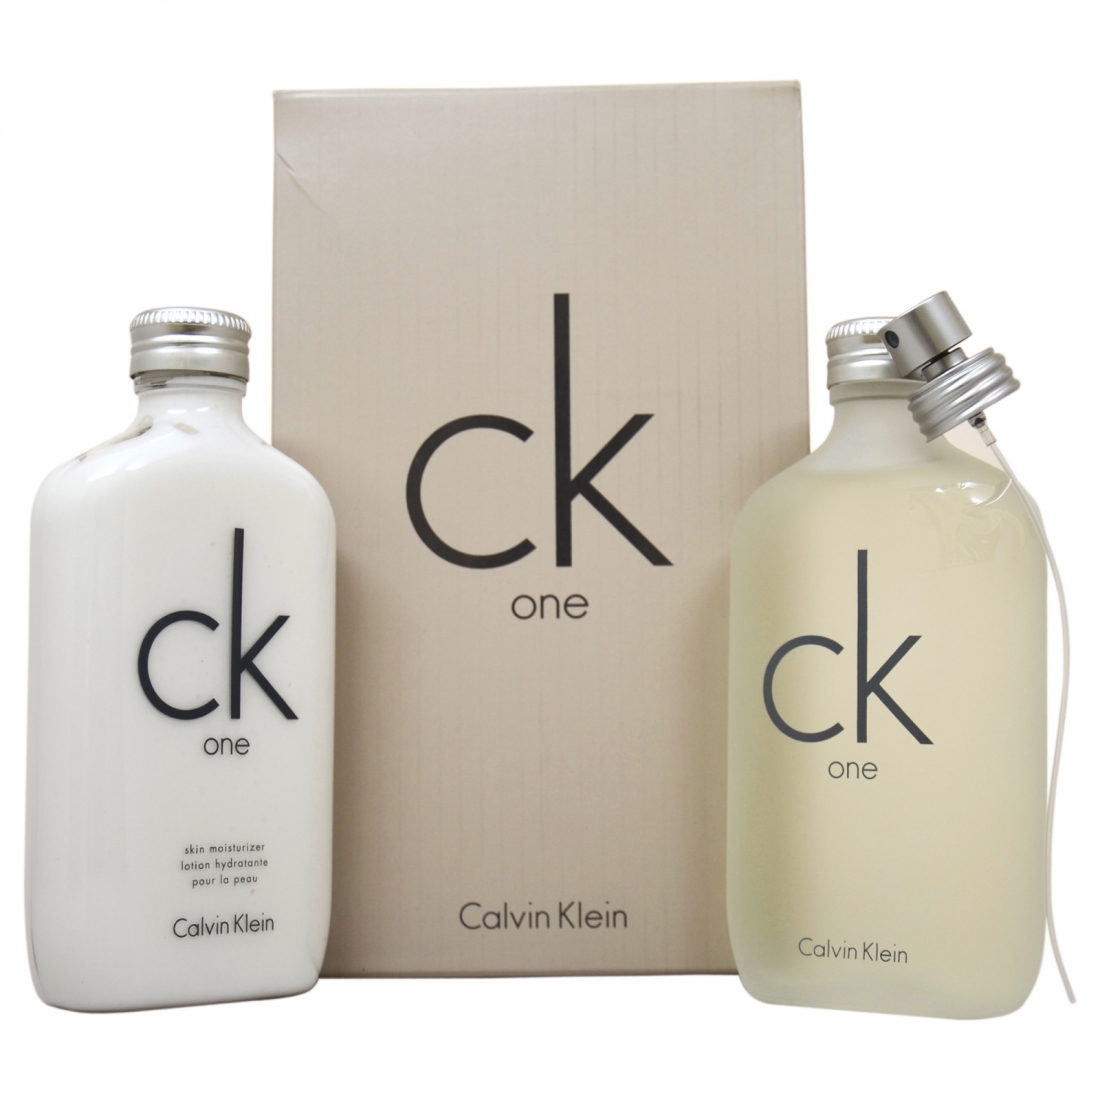 'Ck One' Perfume Set - 2 Pieces